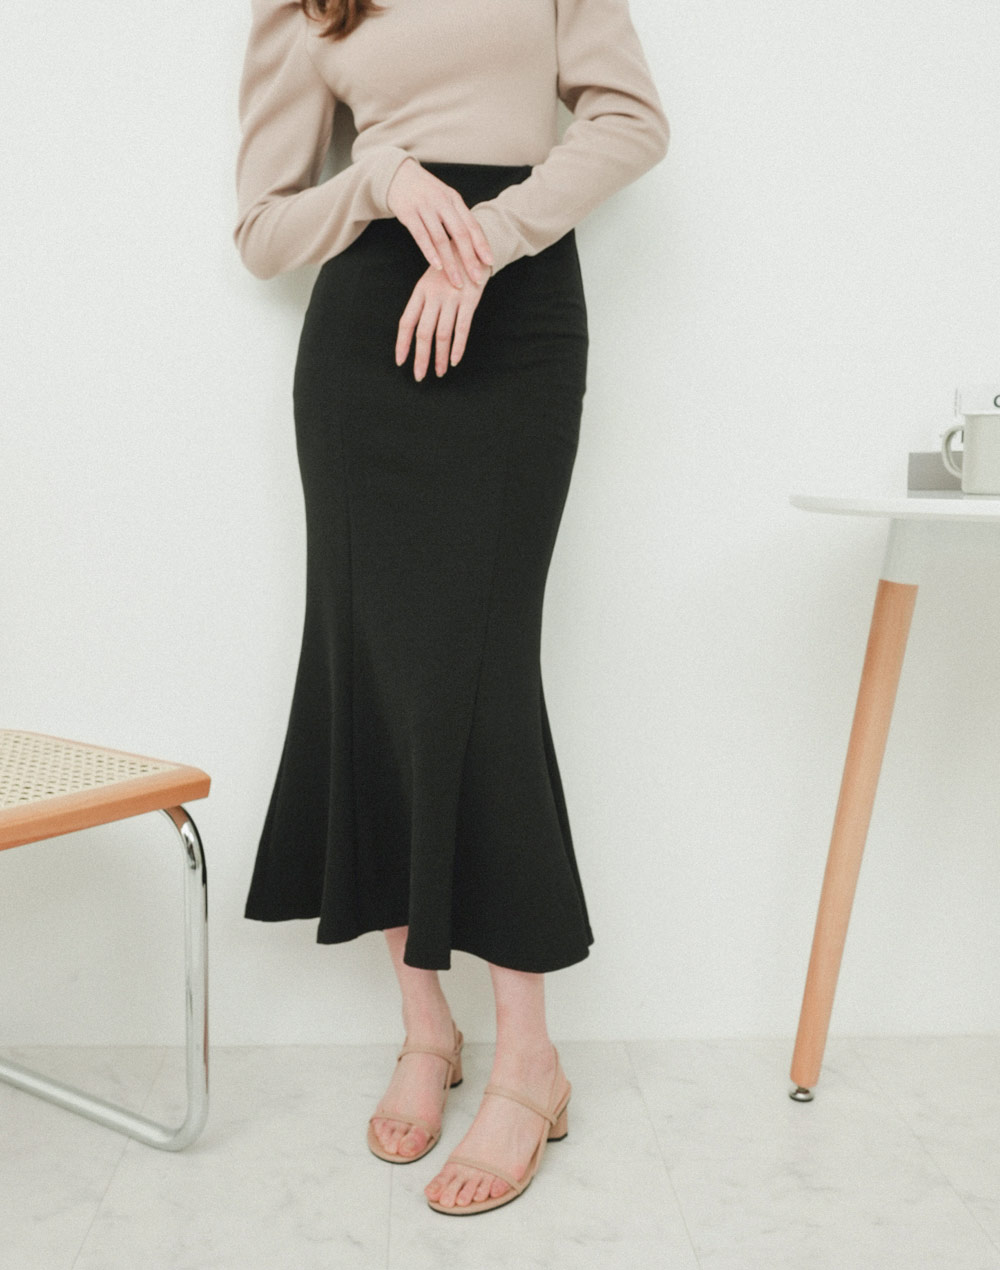 mermaid skirt・t276260（スカート/スカート）| _yoshida_akari | 東京ガールズマーケット